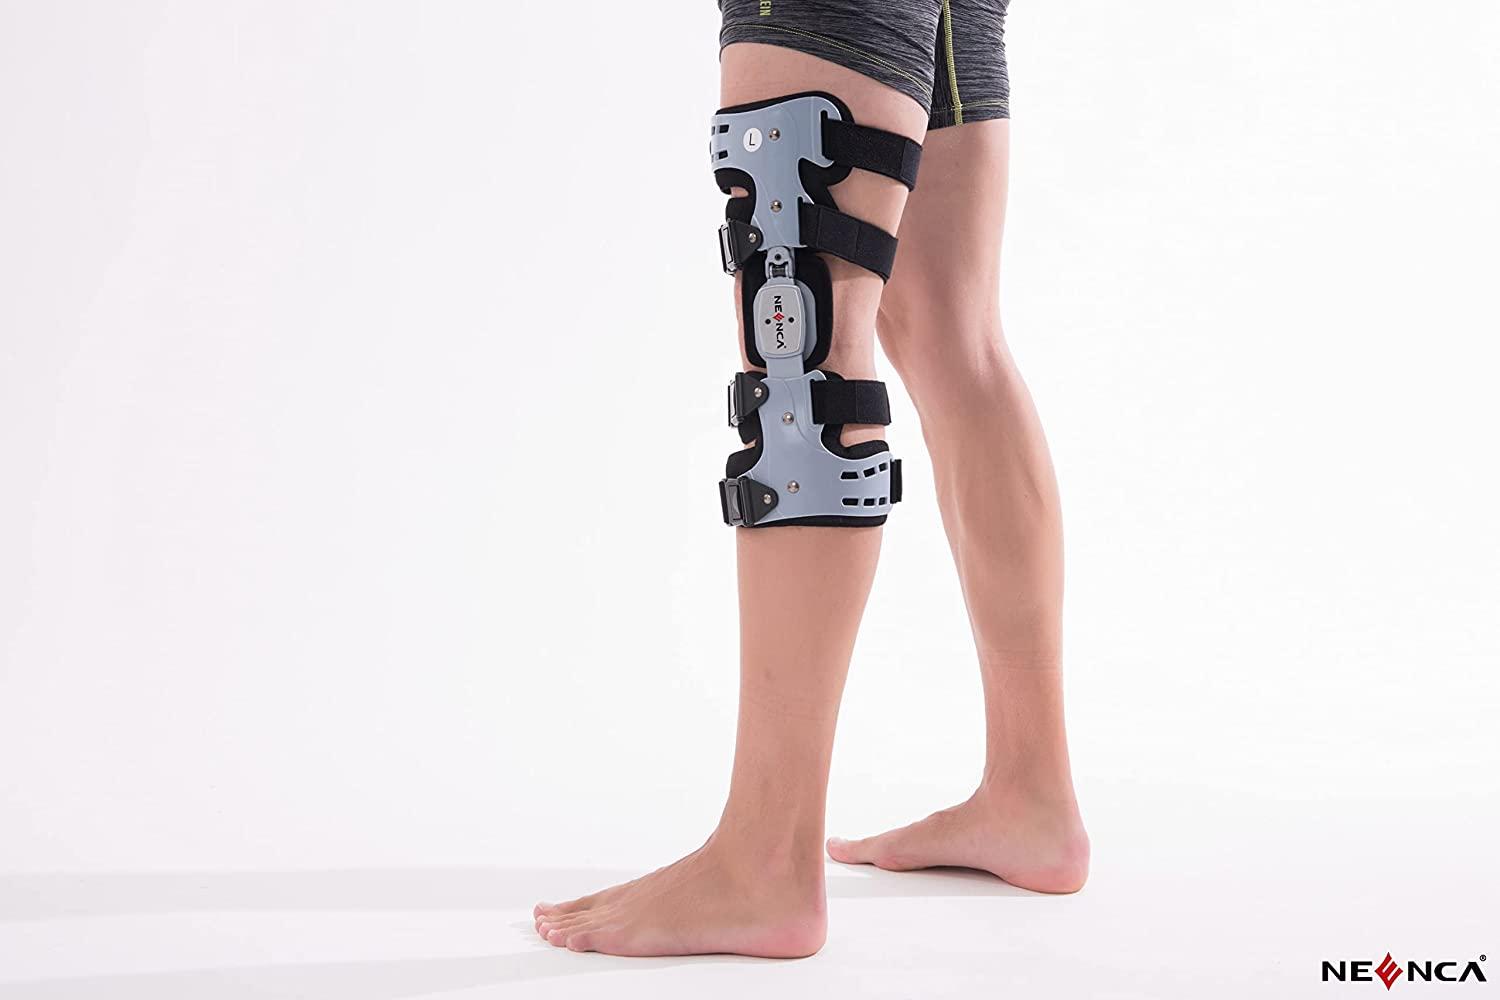 NEENCA Professional Medical Knee Brace, Postoperative Bracing for